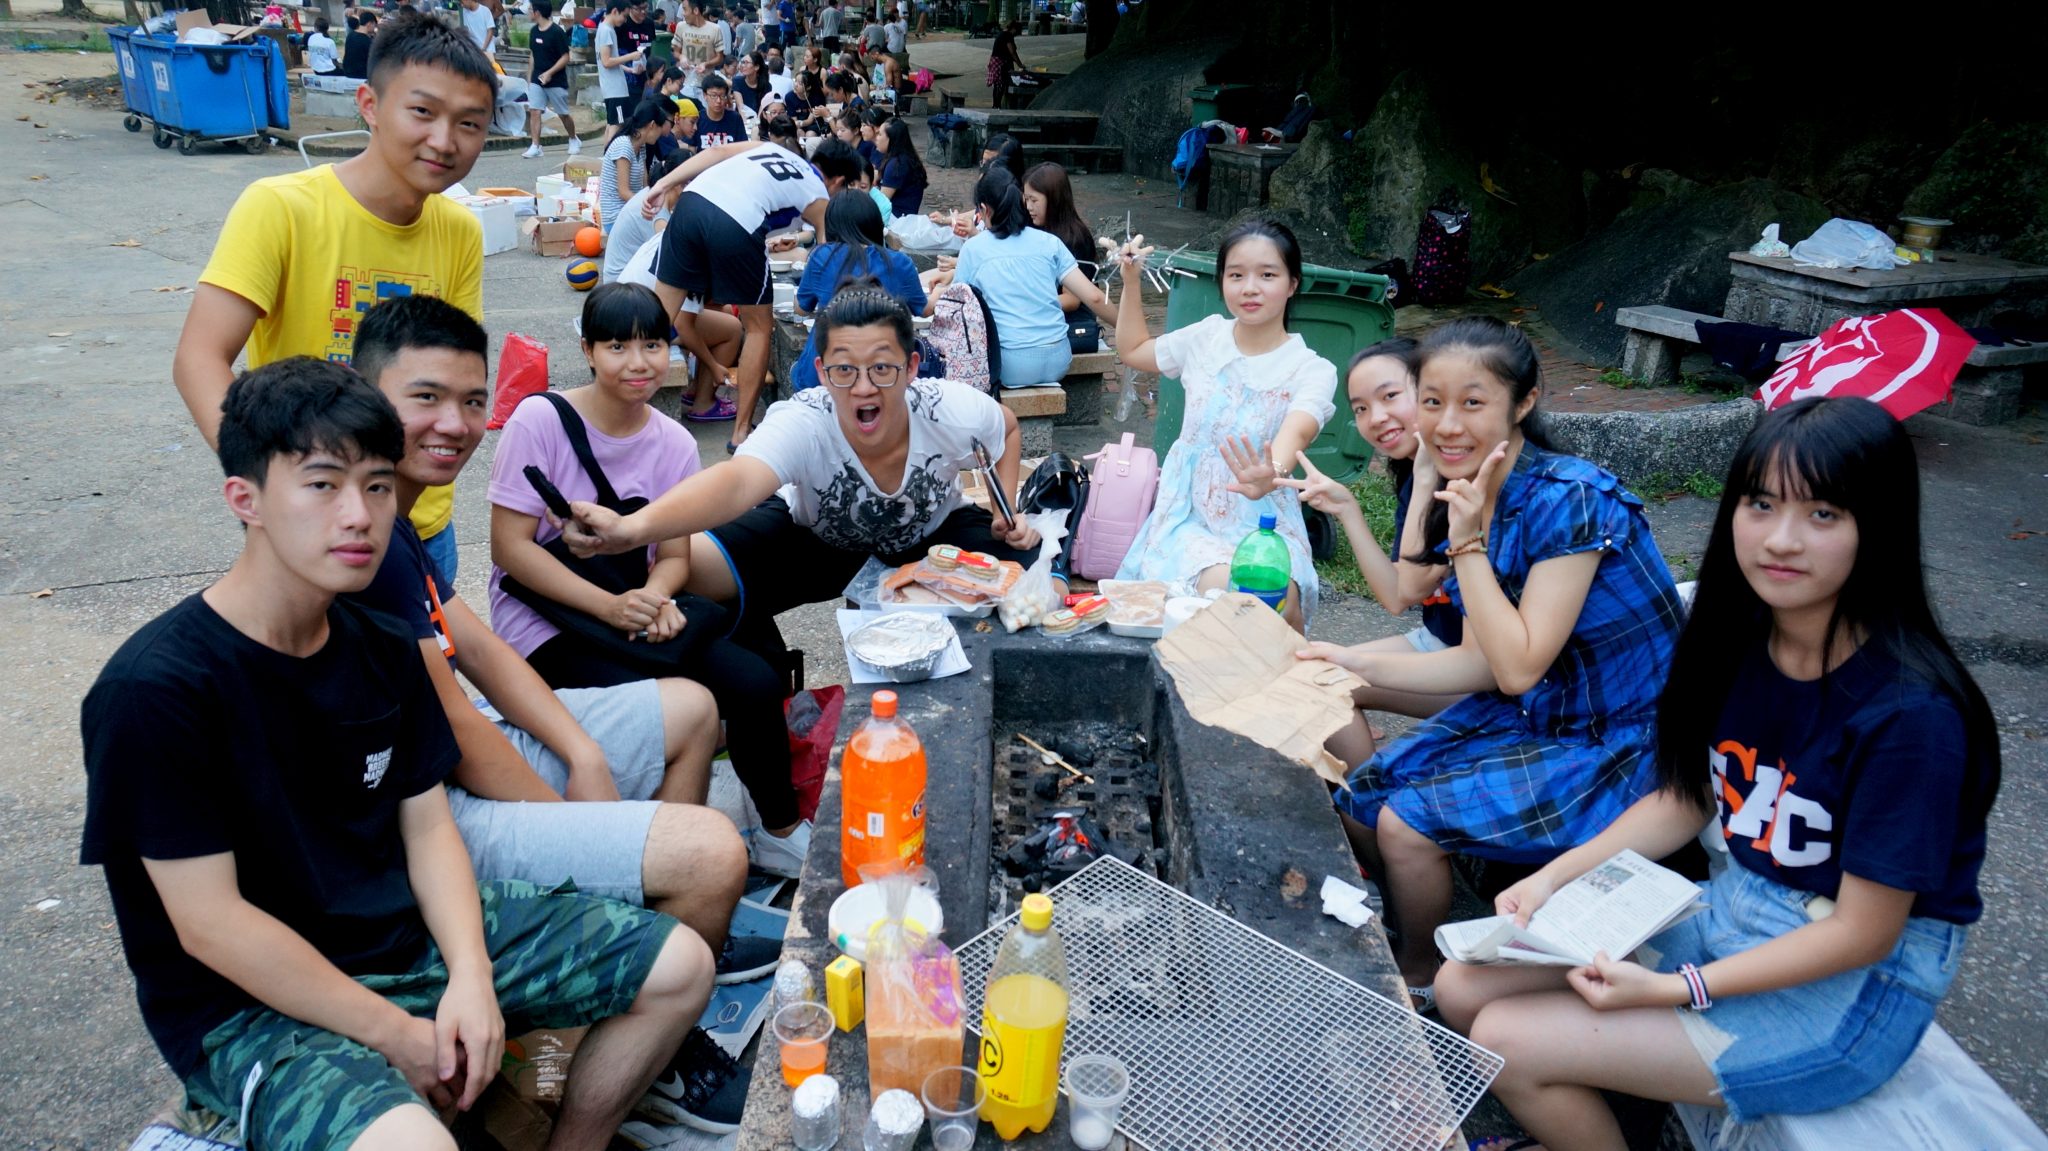 Orientation barbecue gathering at Ha Sac Beach 迎新黑沙燒烤聚會